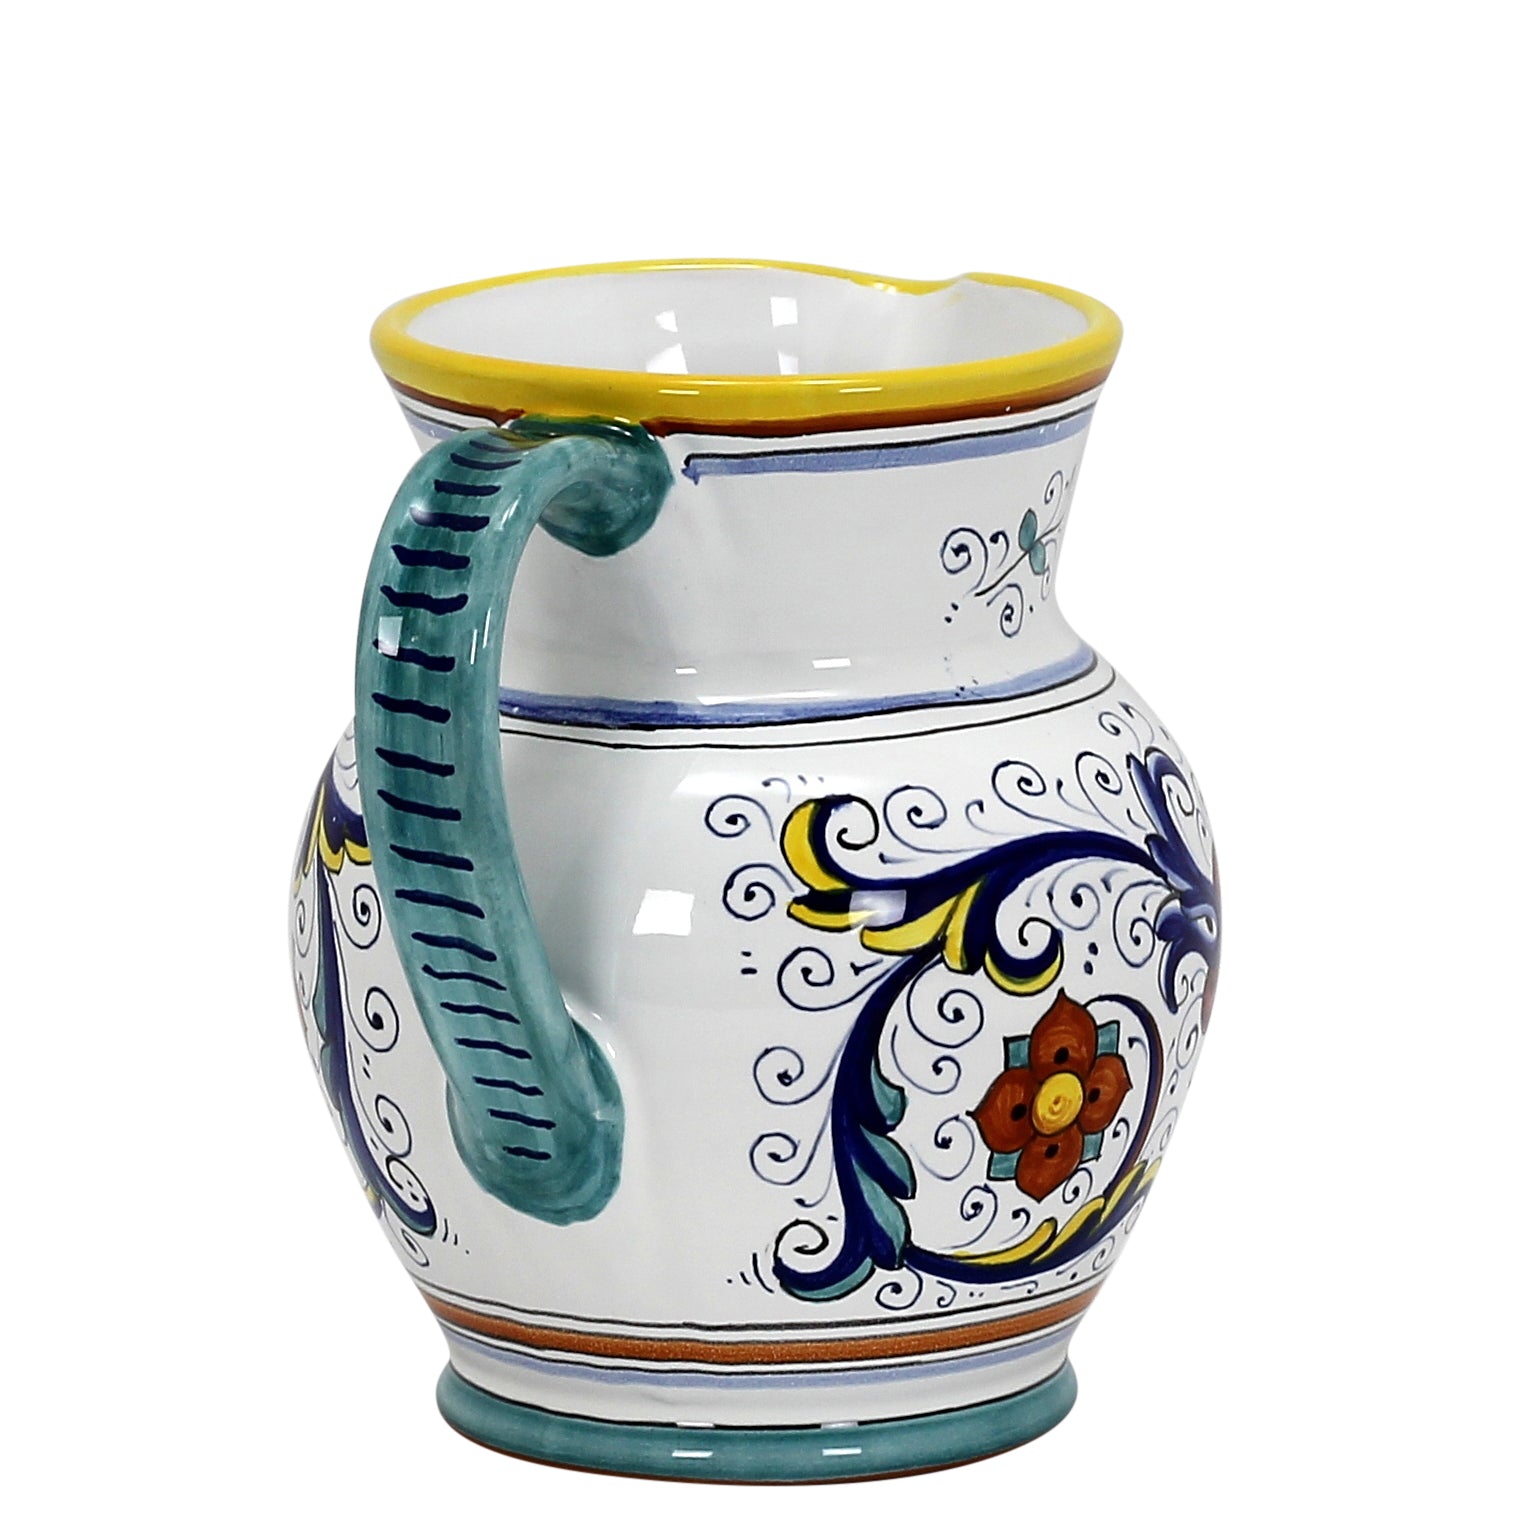 GIFT BOX: With authentic Deruta hand painted ceramic - Pitcher Ricco Deruta Design